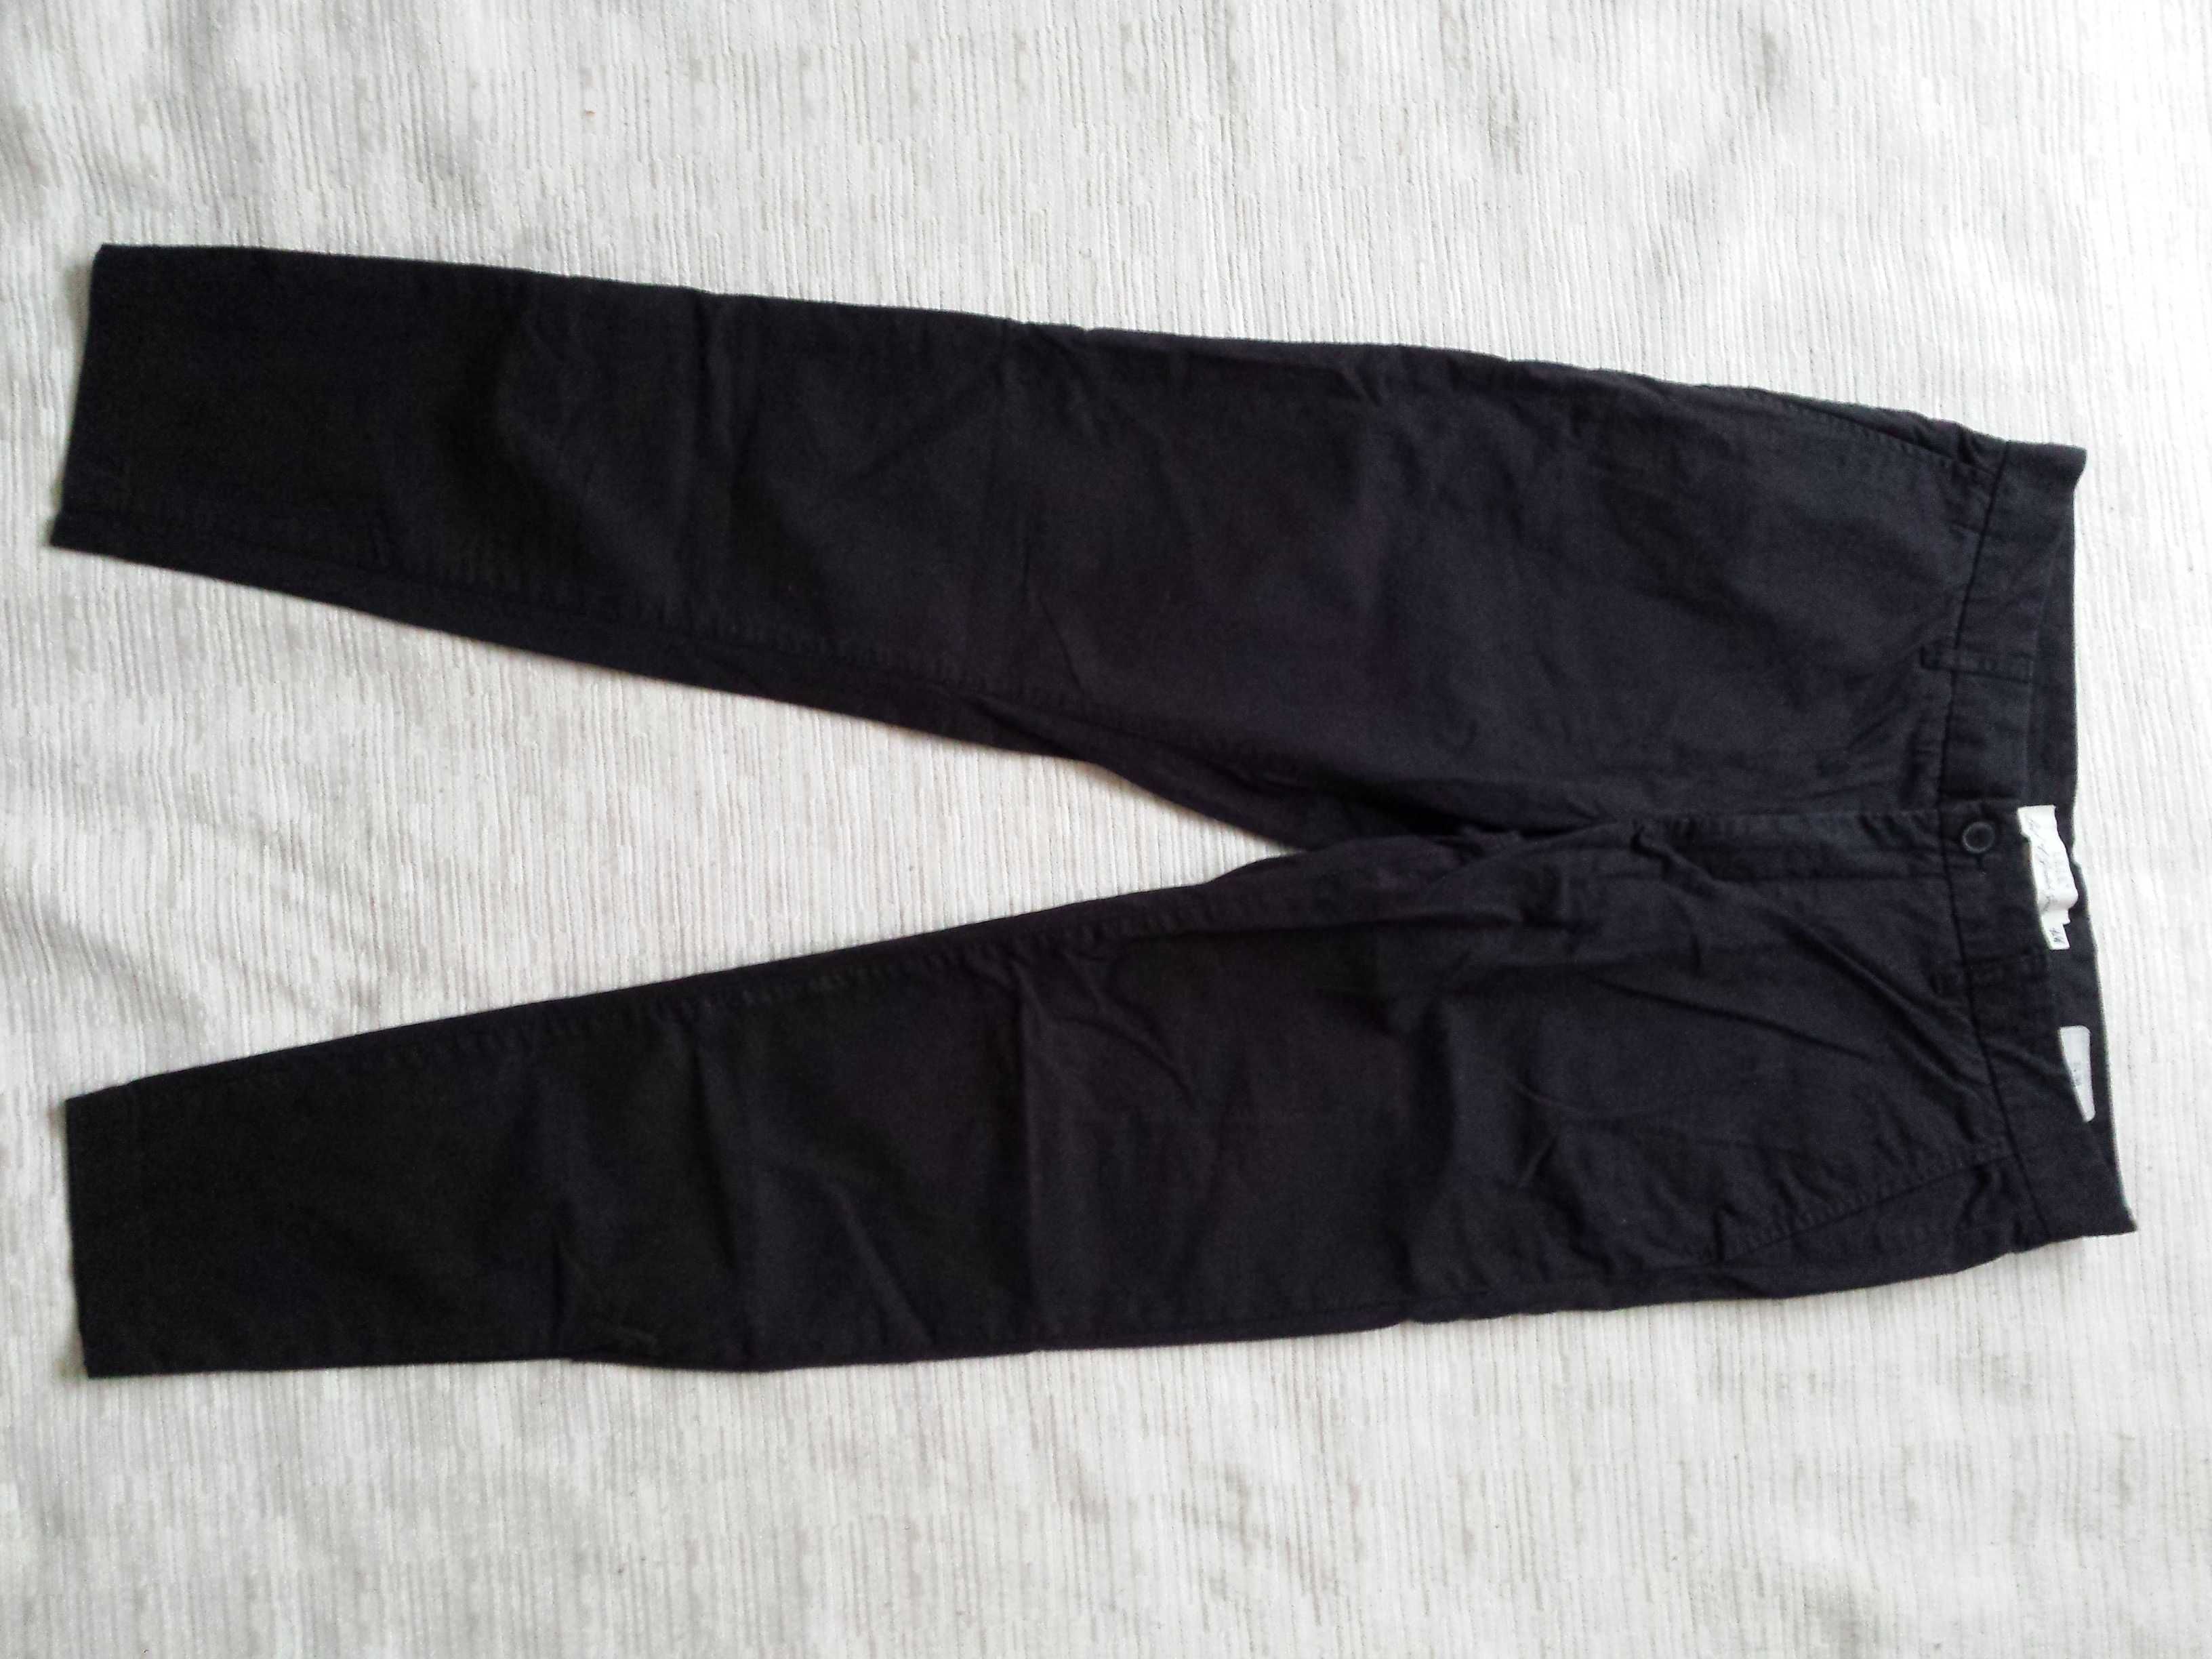 Spodnie LOOG roz. 170, spodnie czarne